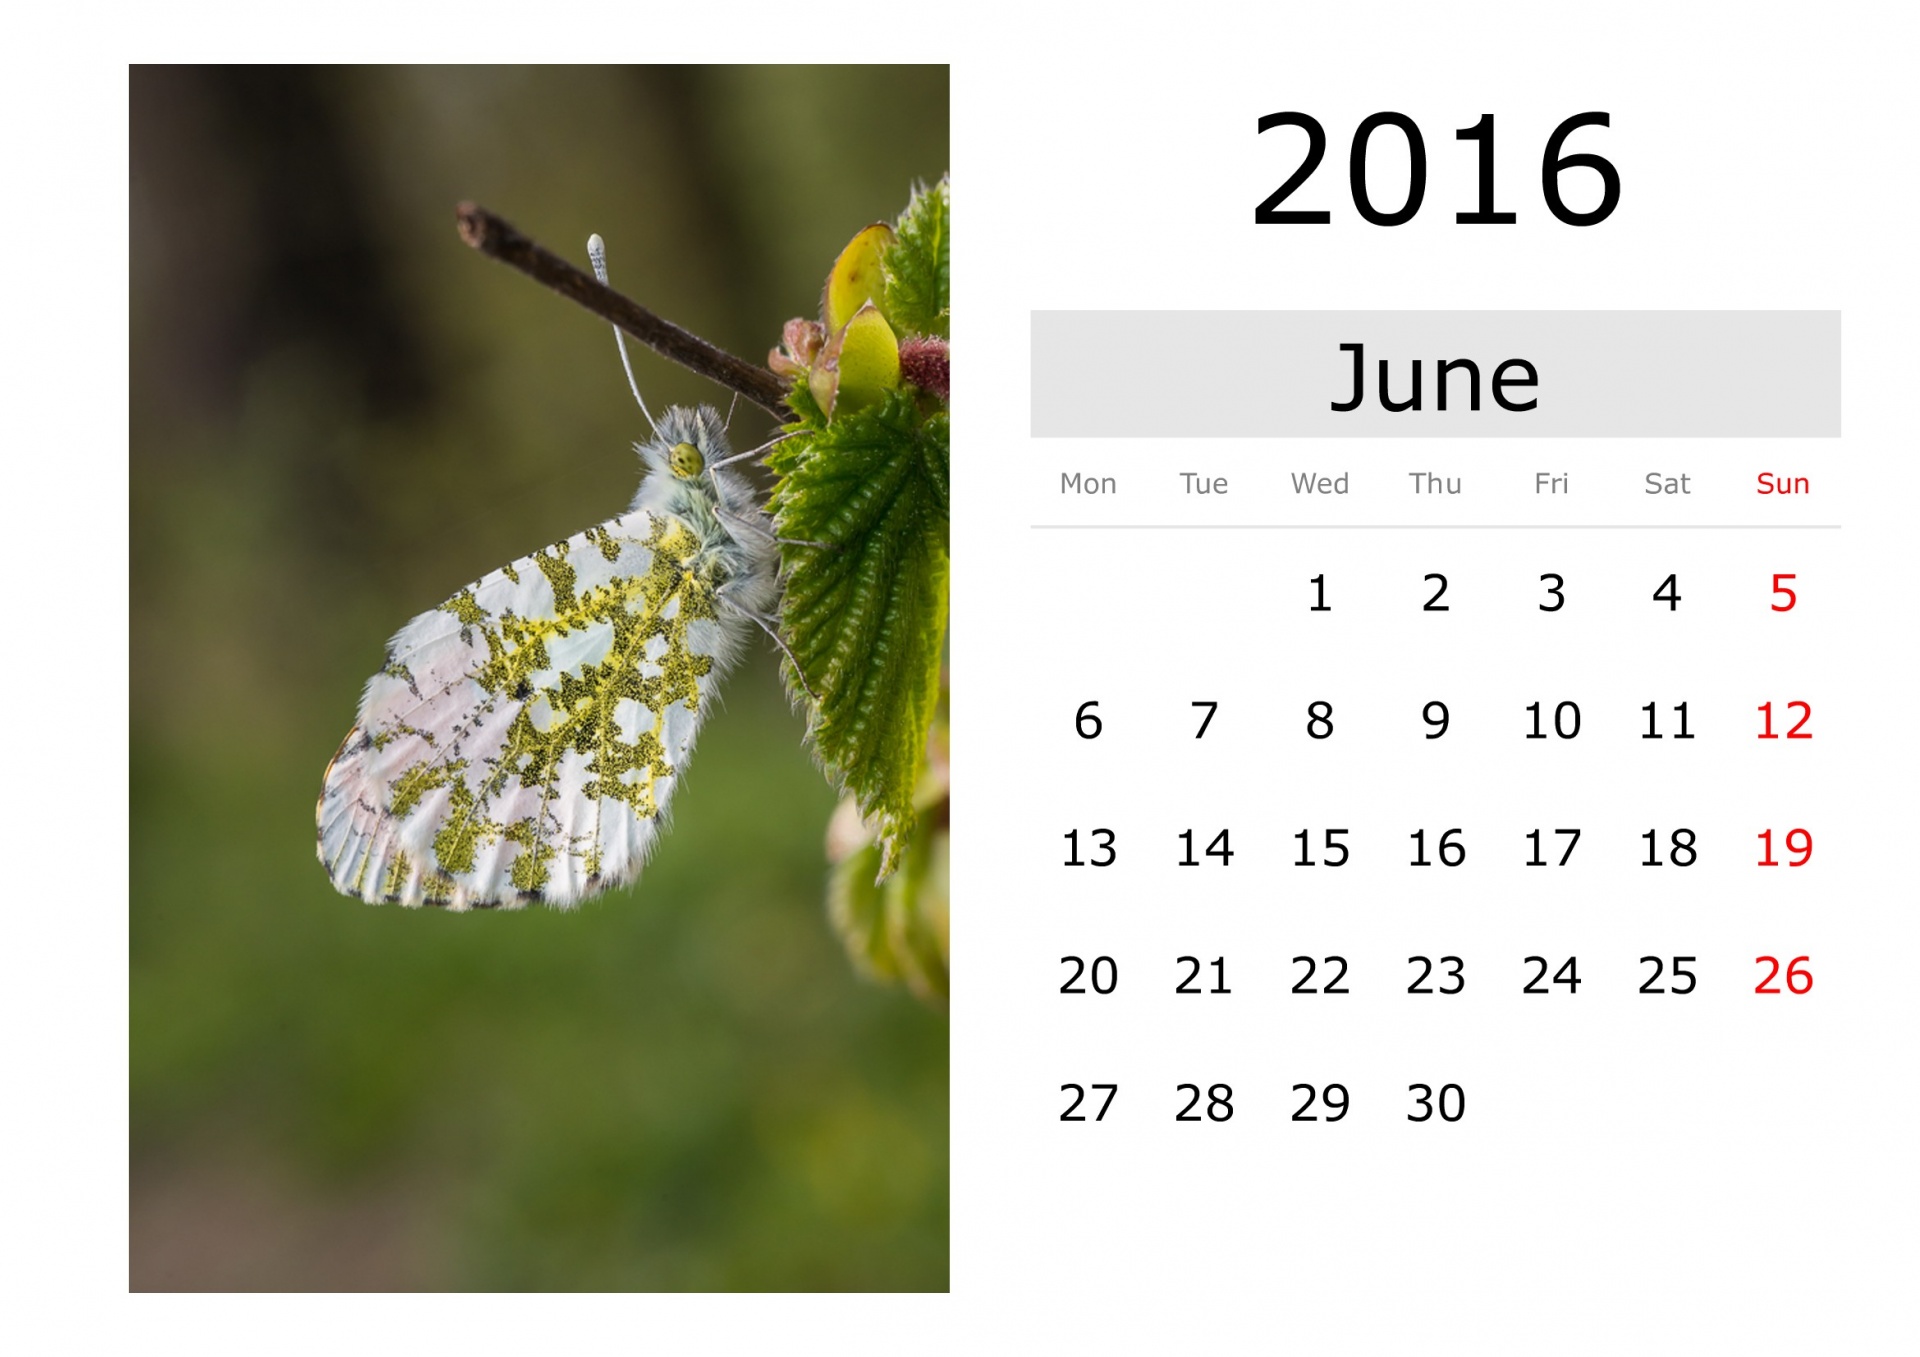 calendar-june-2016-english-free-stock-photo-public-domain-pictures